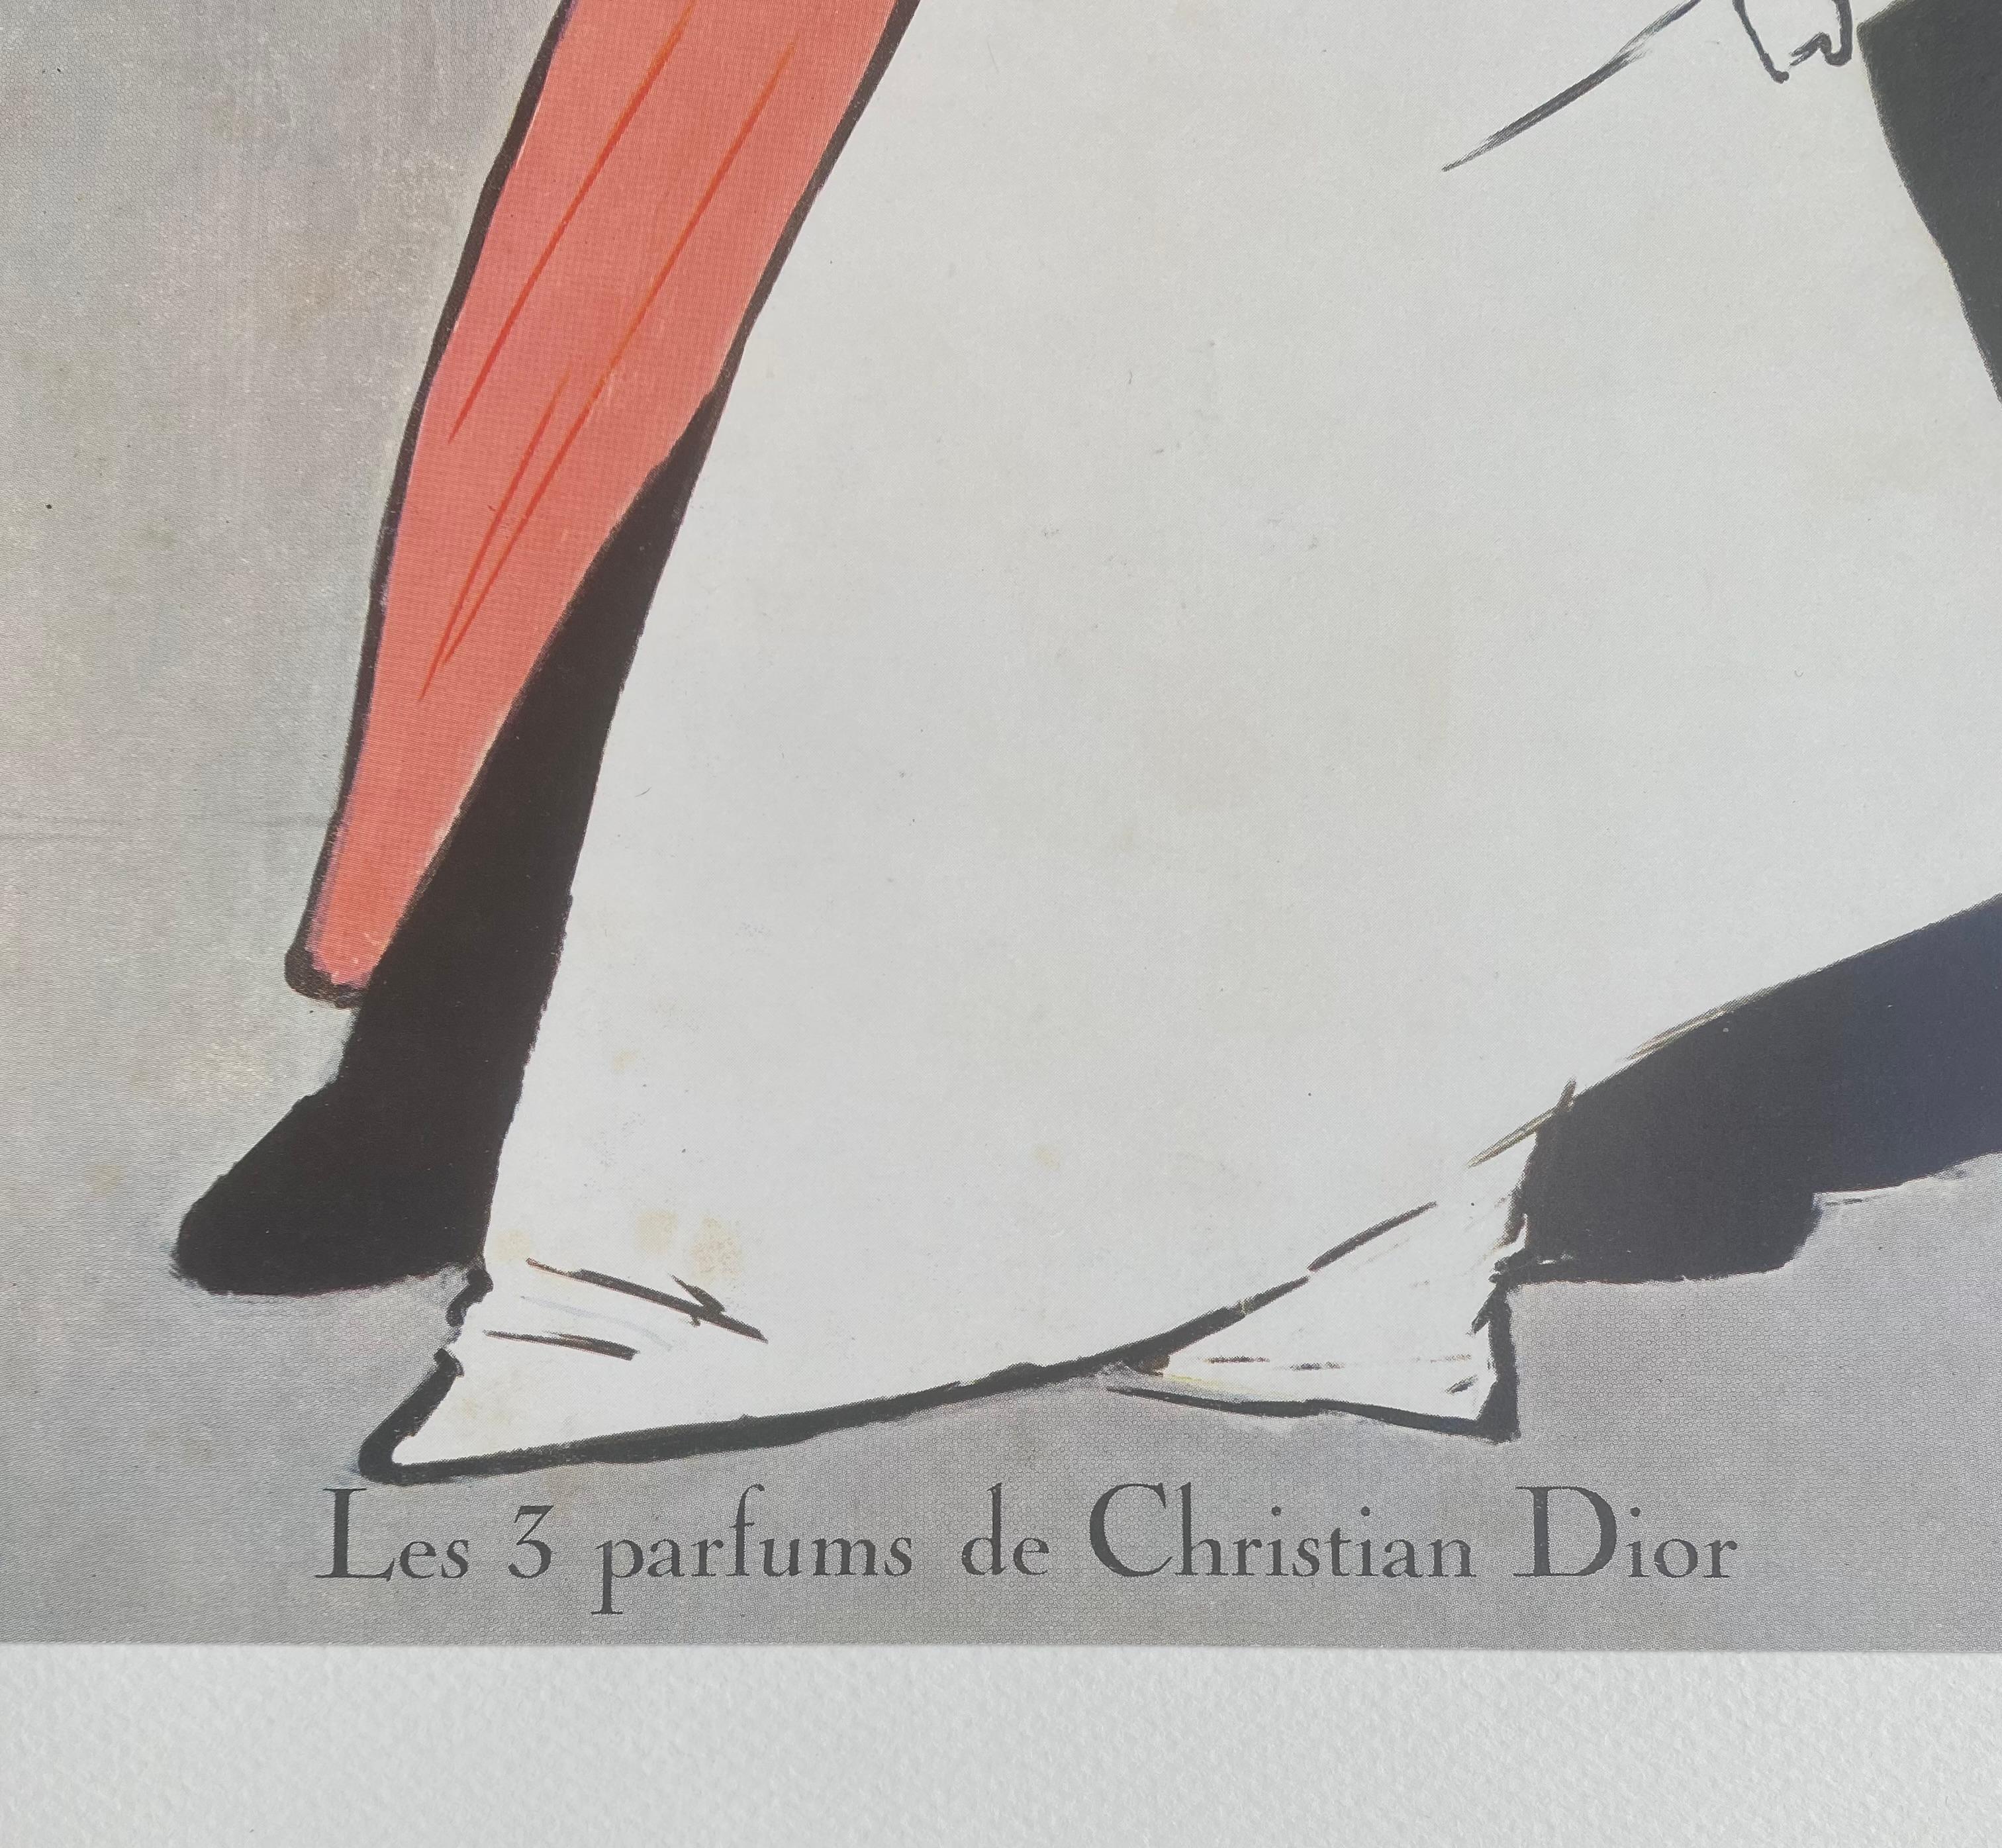 Paper René Grau, Advertising Illustration for Christian Dior, 1962